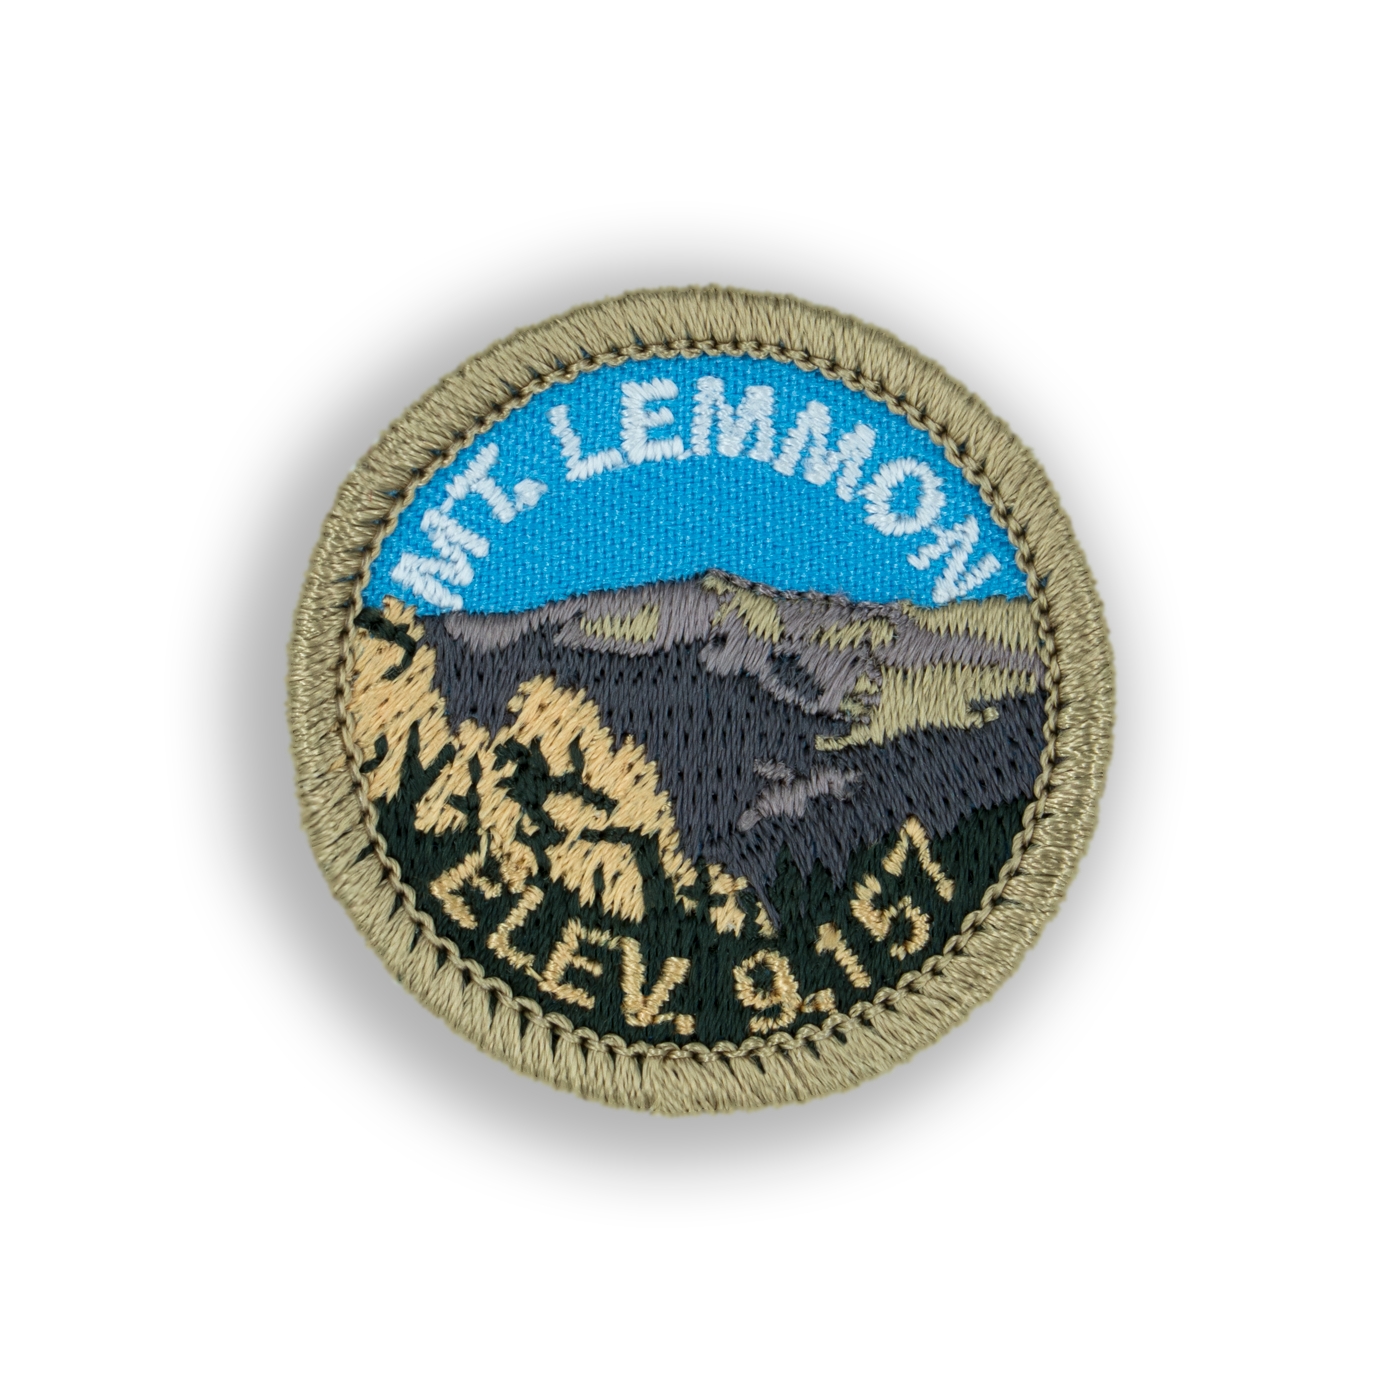 Mount Lemmon Patch | Demerit Wear - Fake Merit Badges